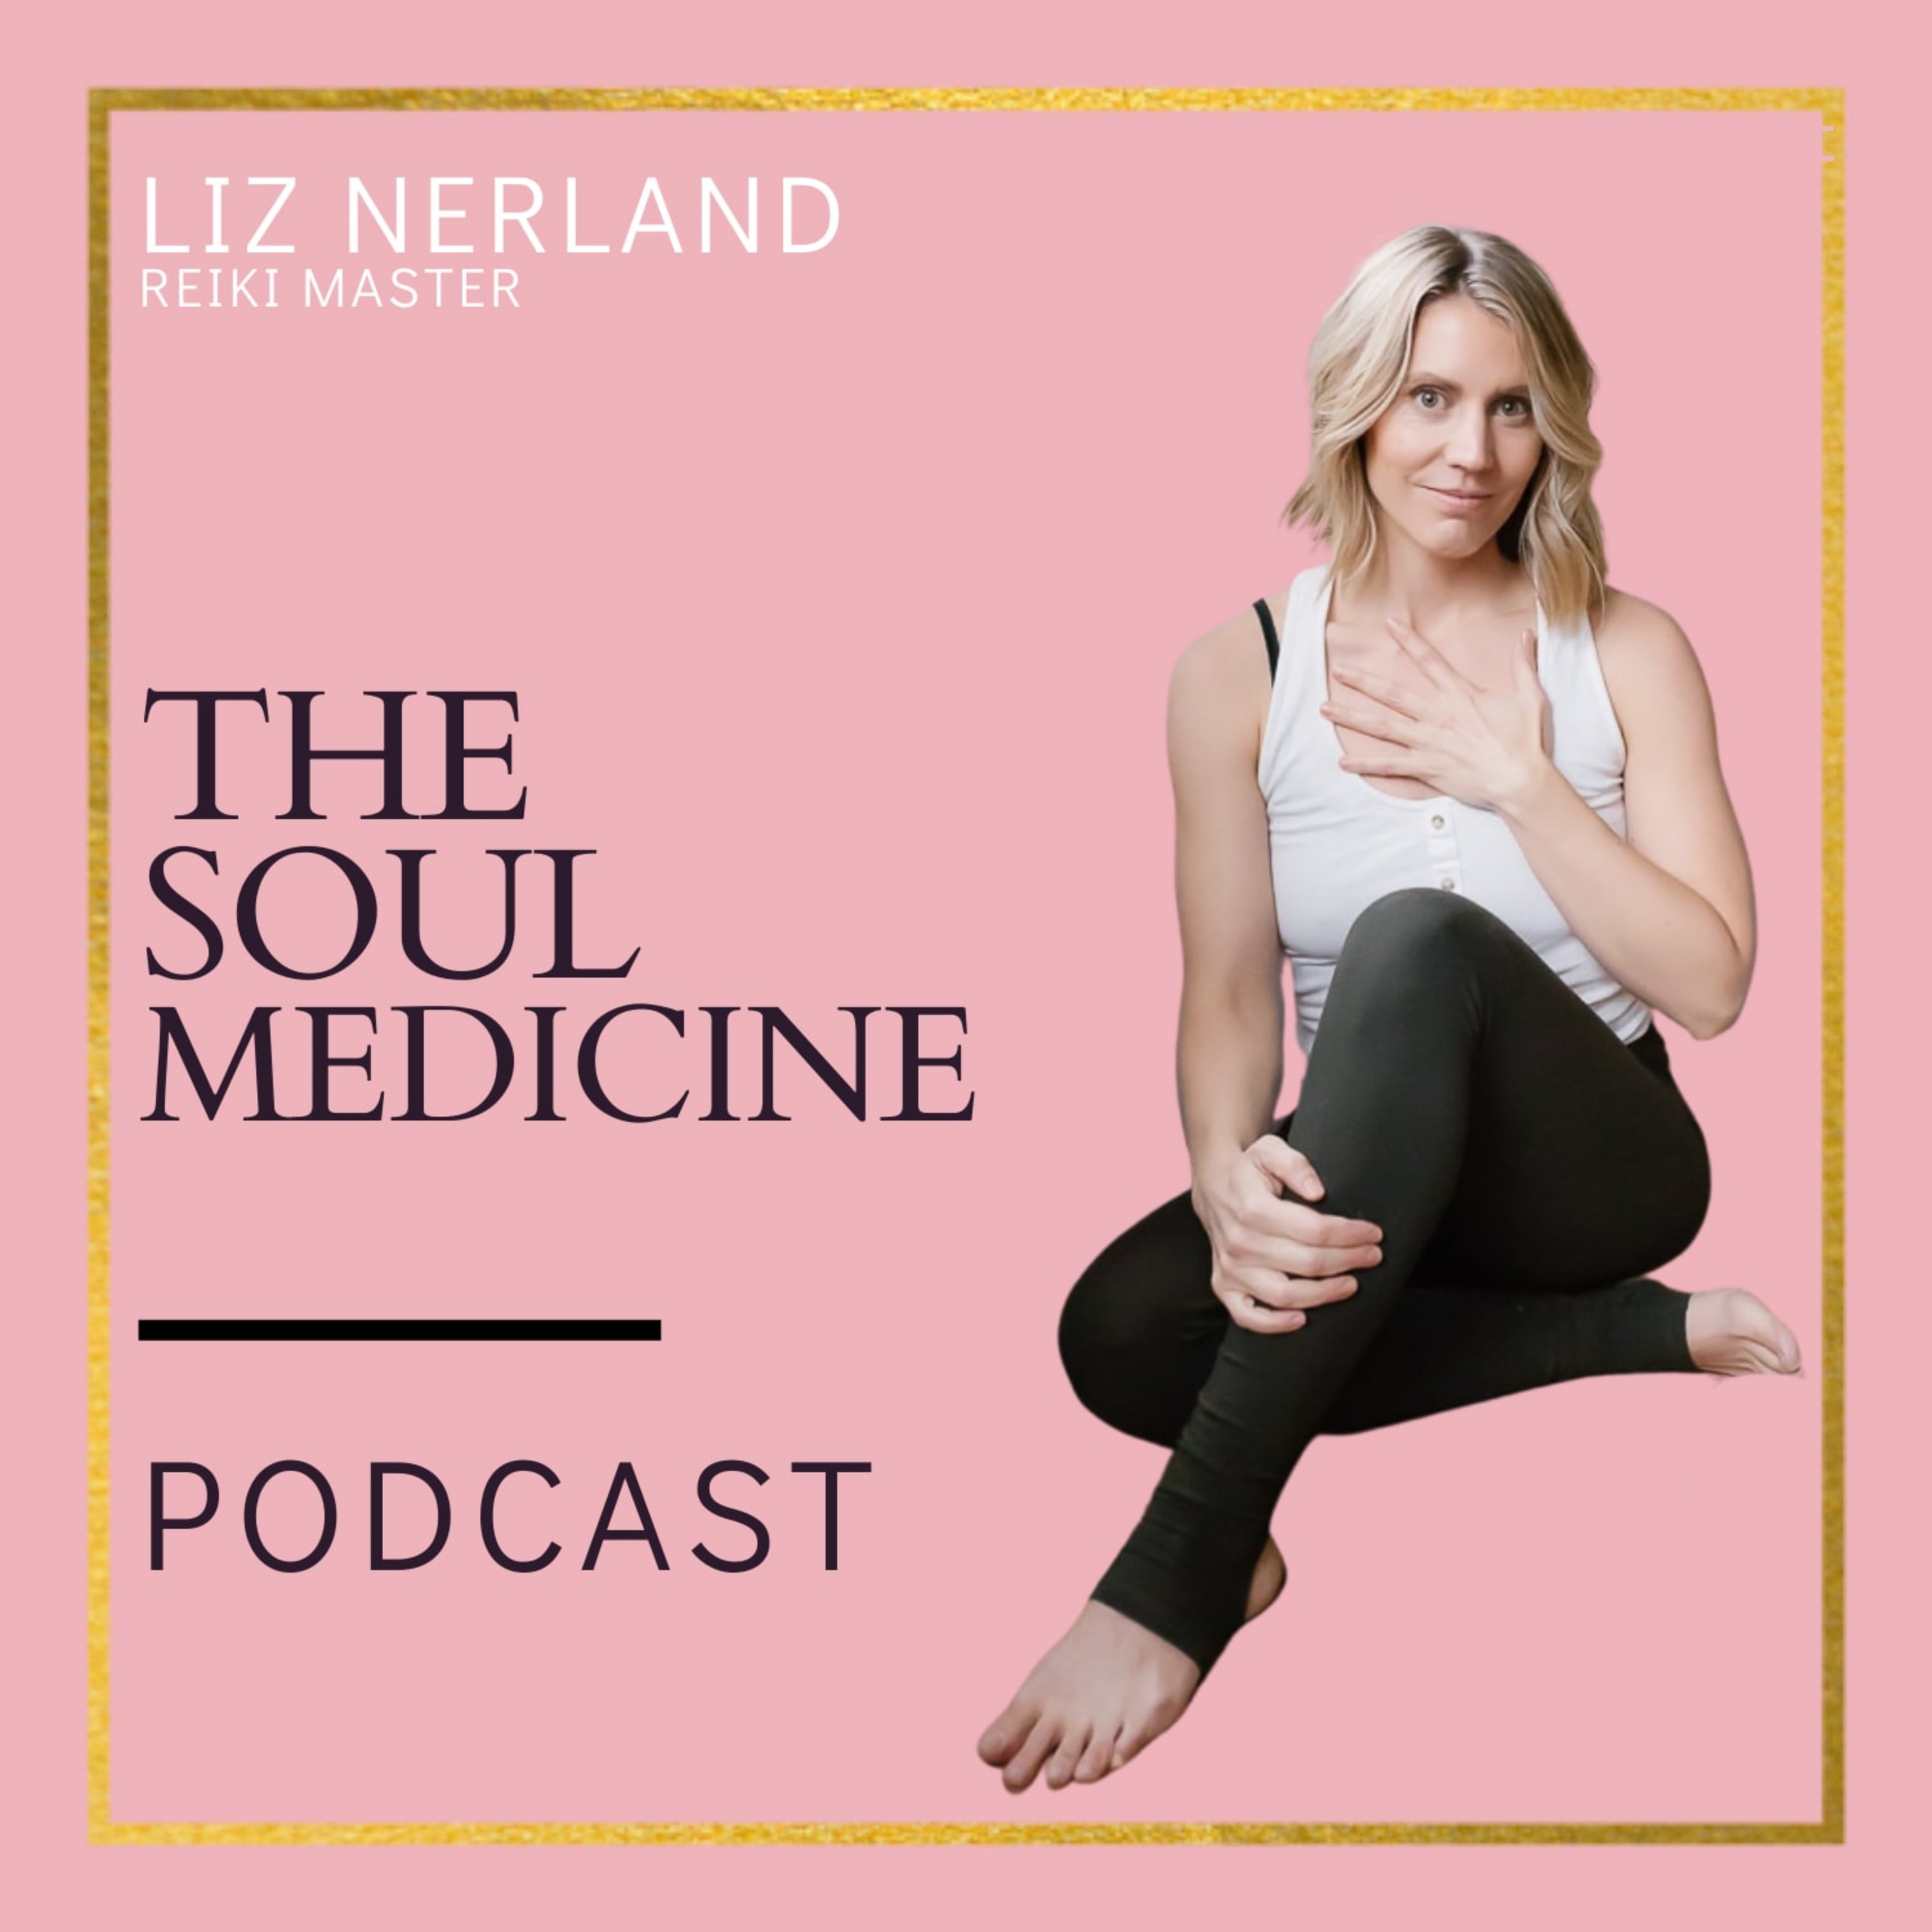 The Soul Medicine Podcast